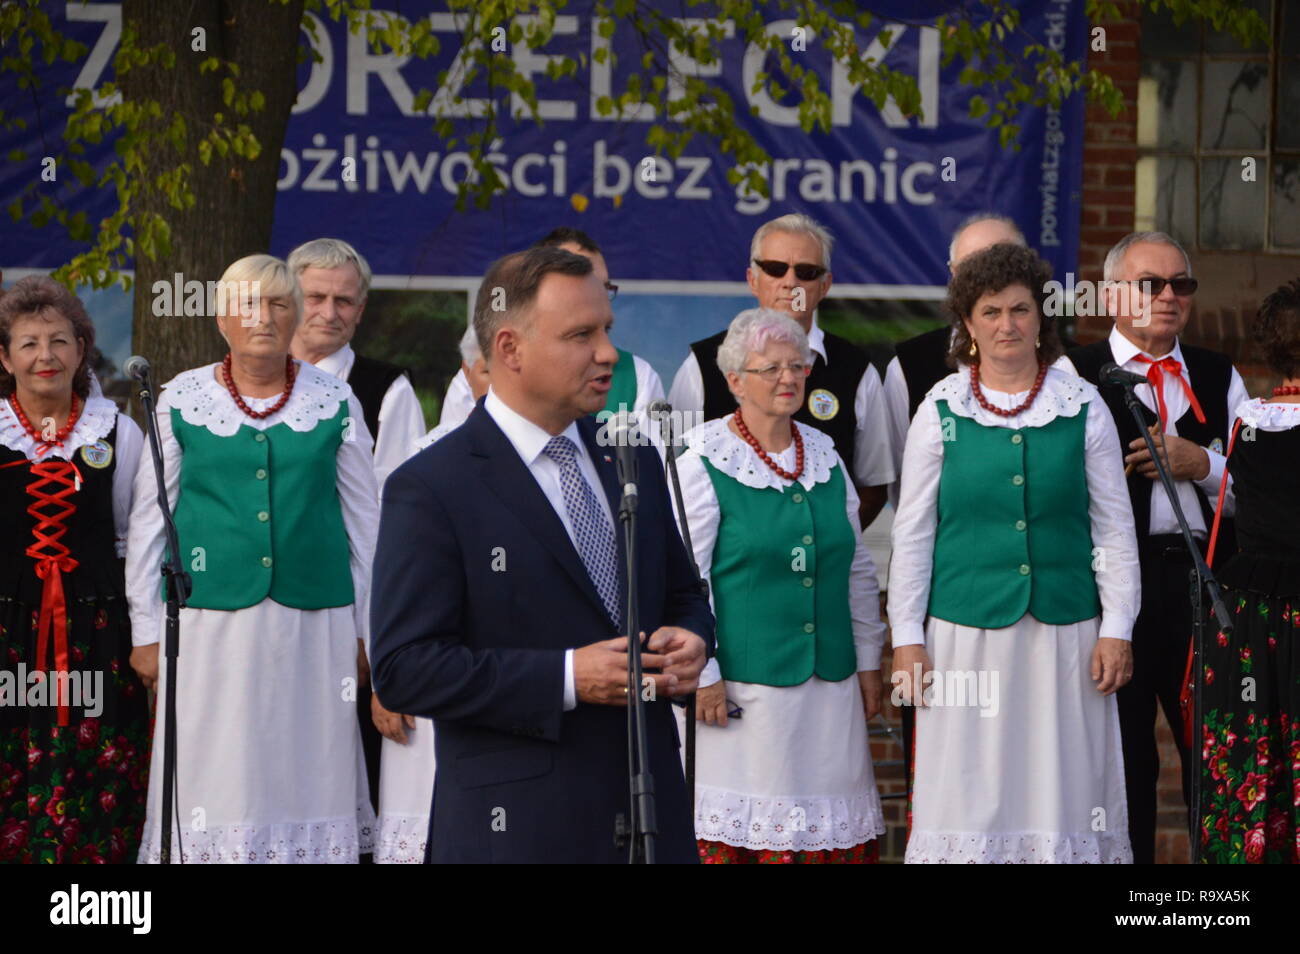 ZGORZELEC, POLAND september 09, 2018: The President of Poland; Andrzej Duda visit the city on september 09, 2018, in ZGORZELEC, POLAND Stock Photo